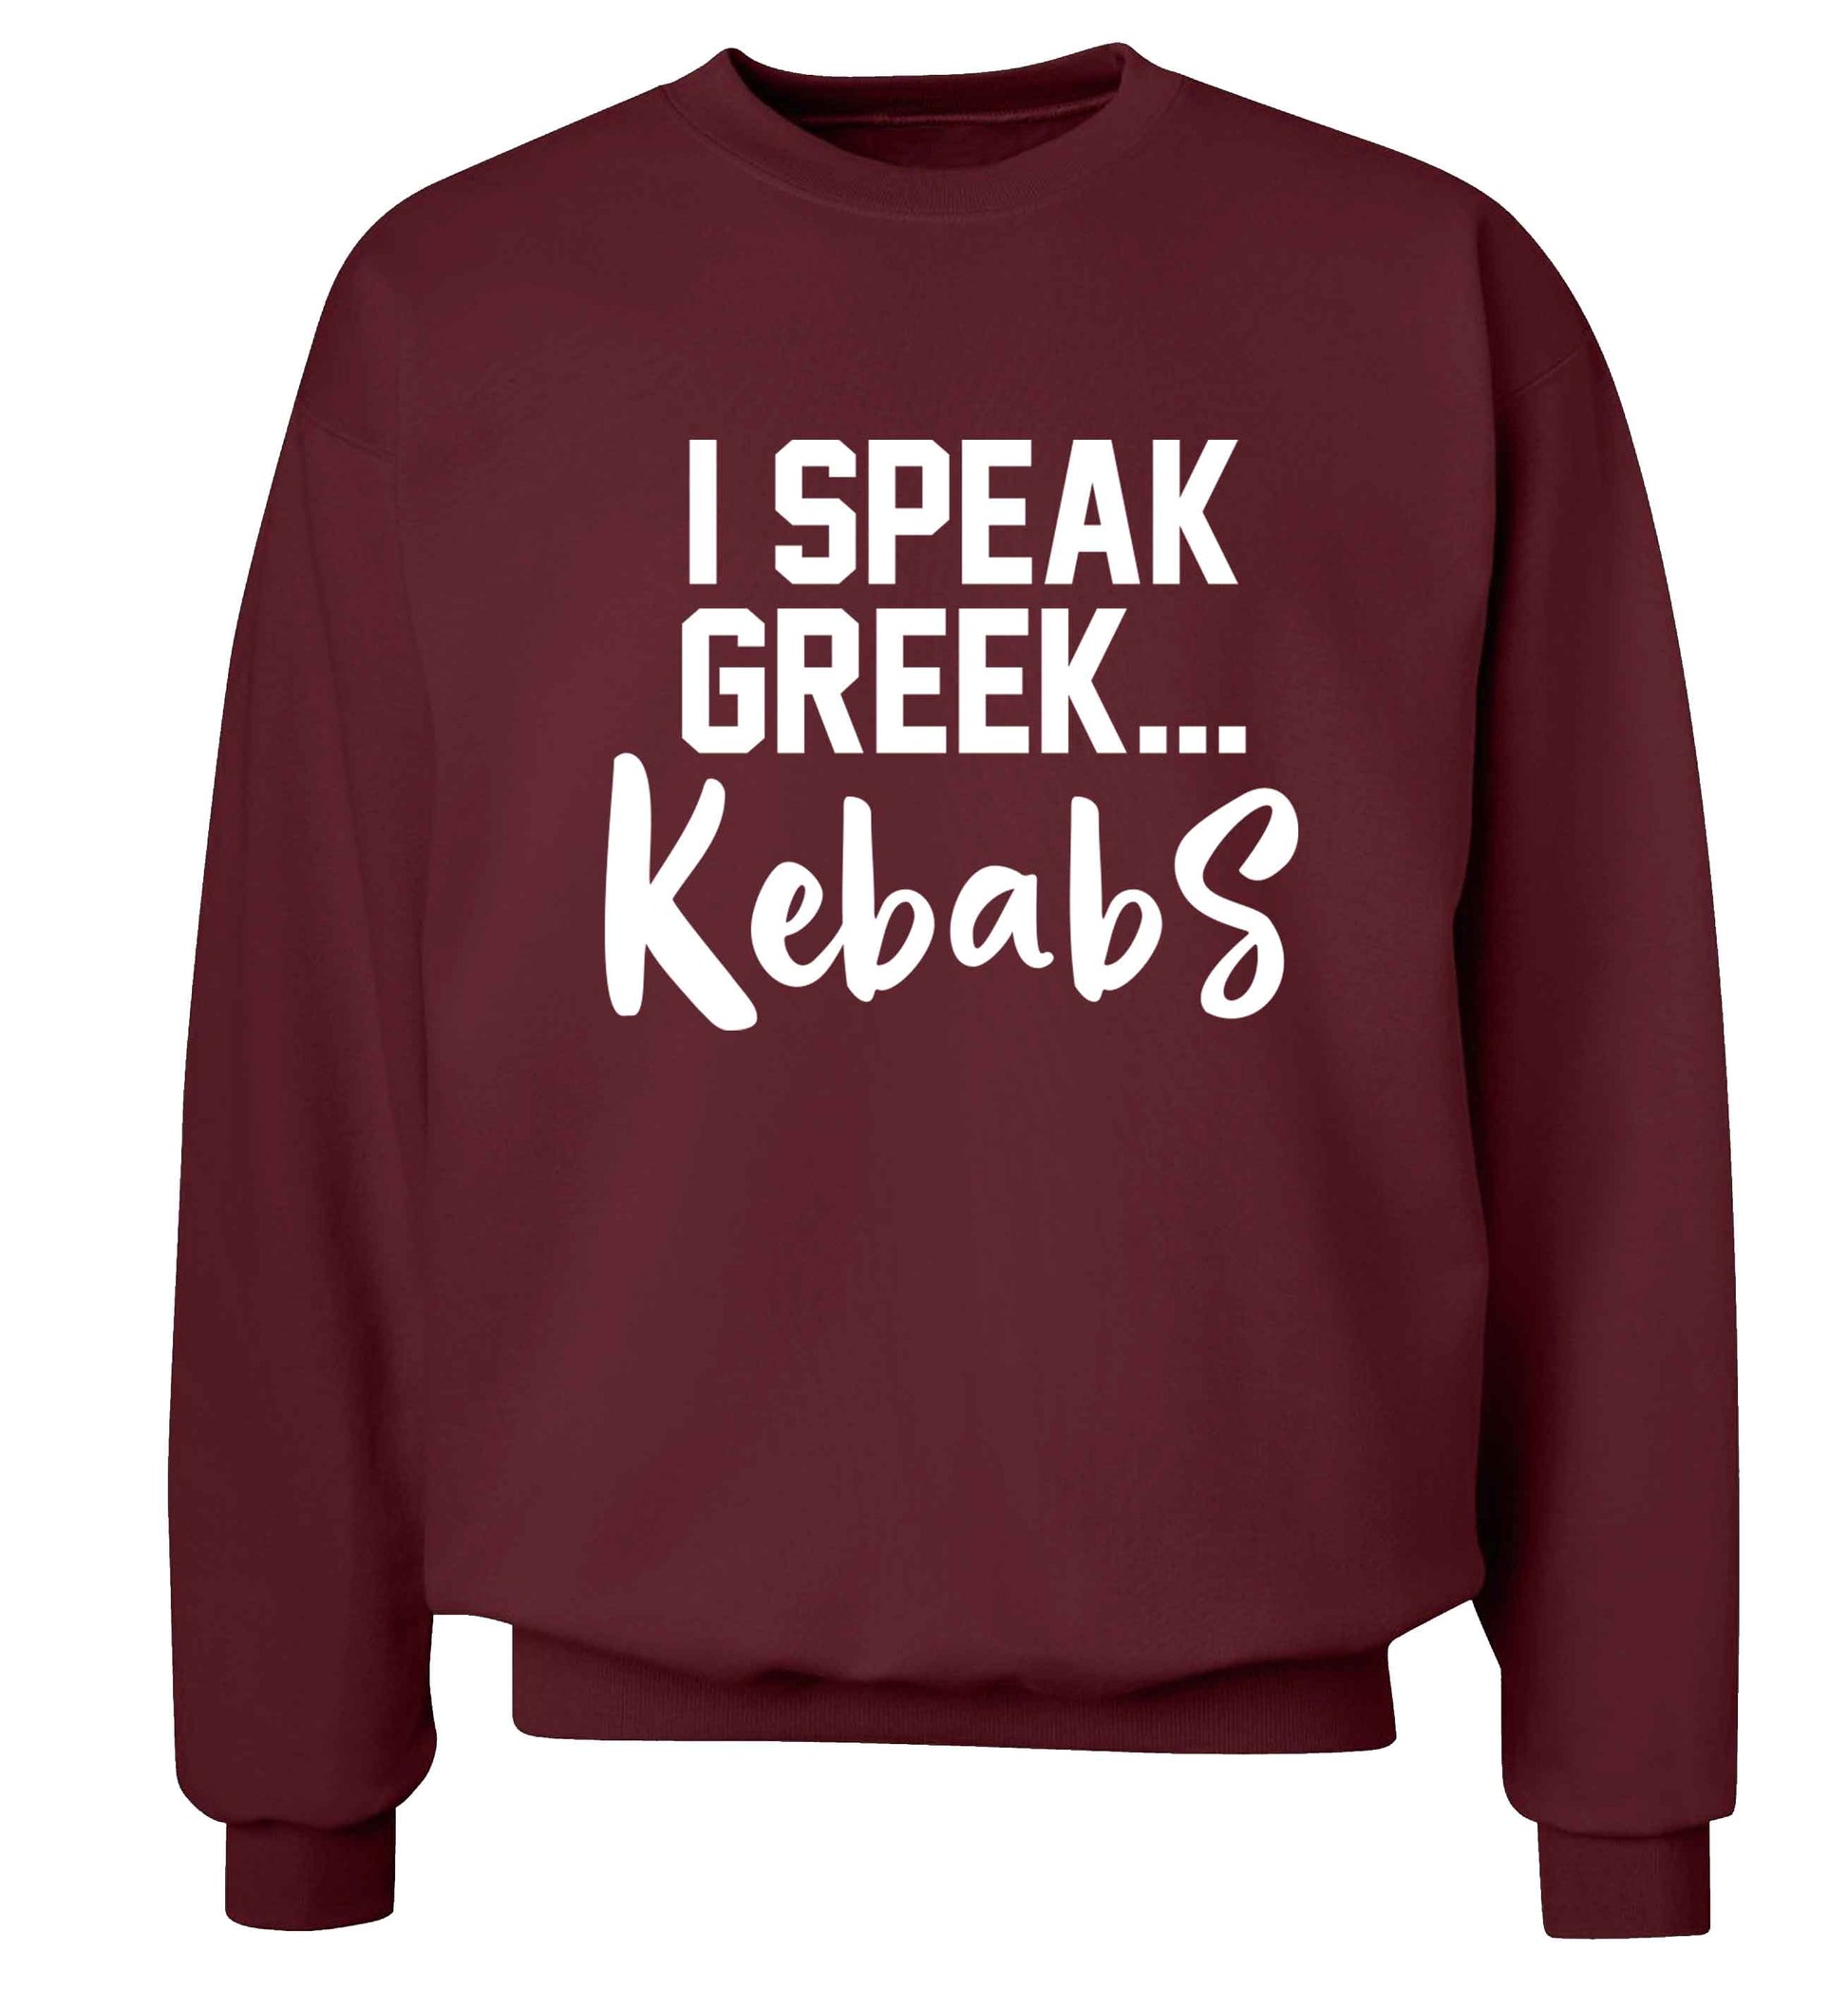 I speak Greek...kebabs Adult's unisex maroon Sweater 2XL